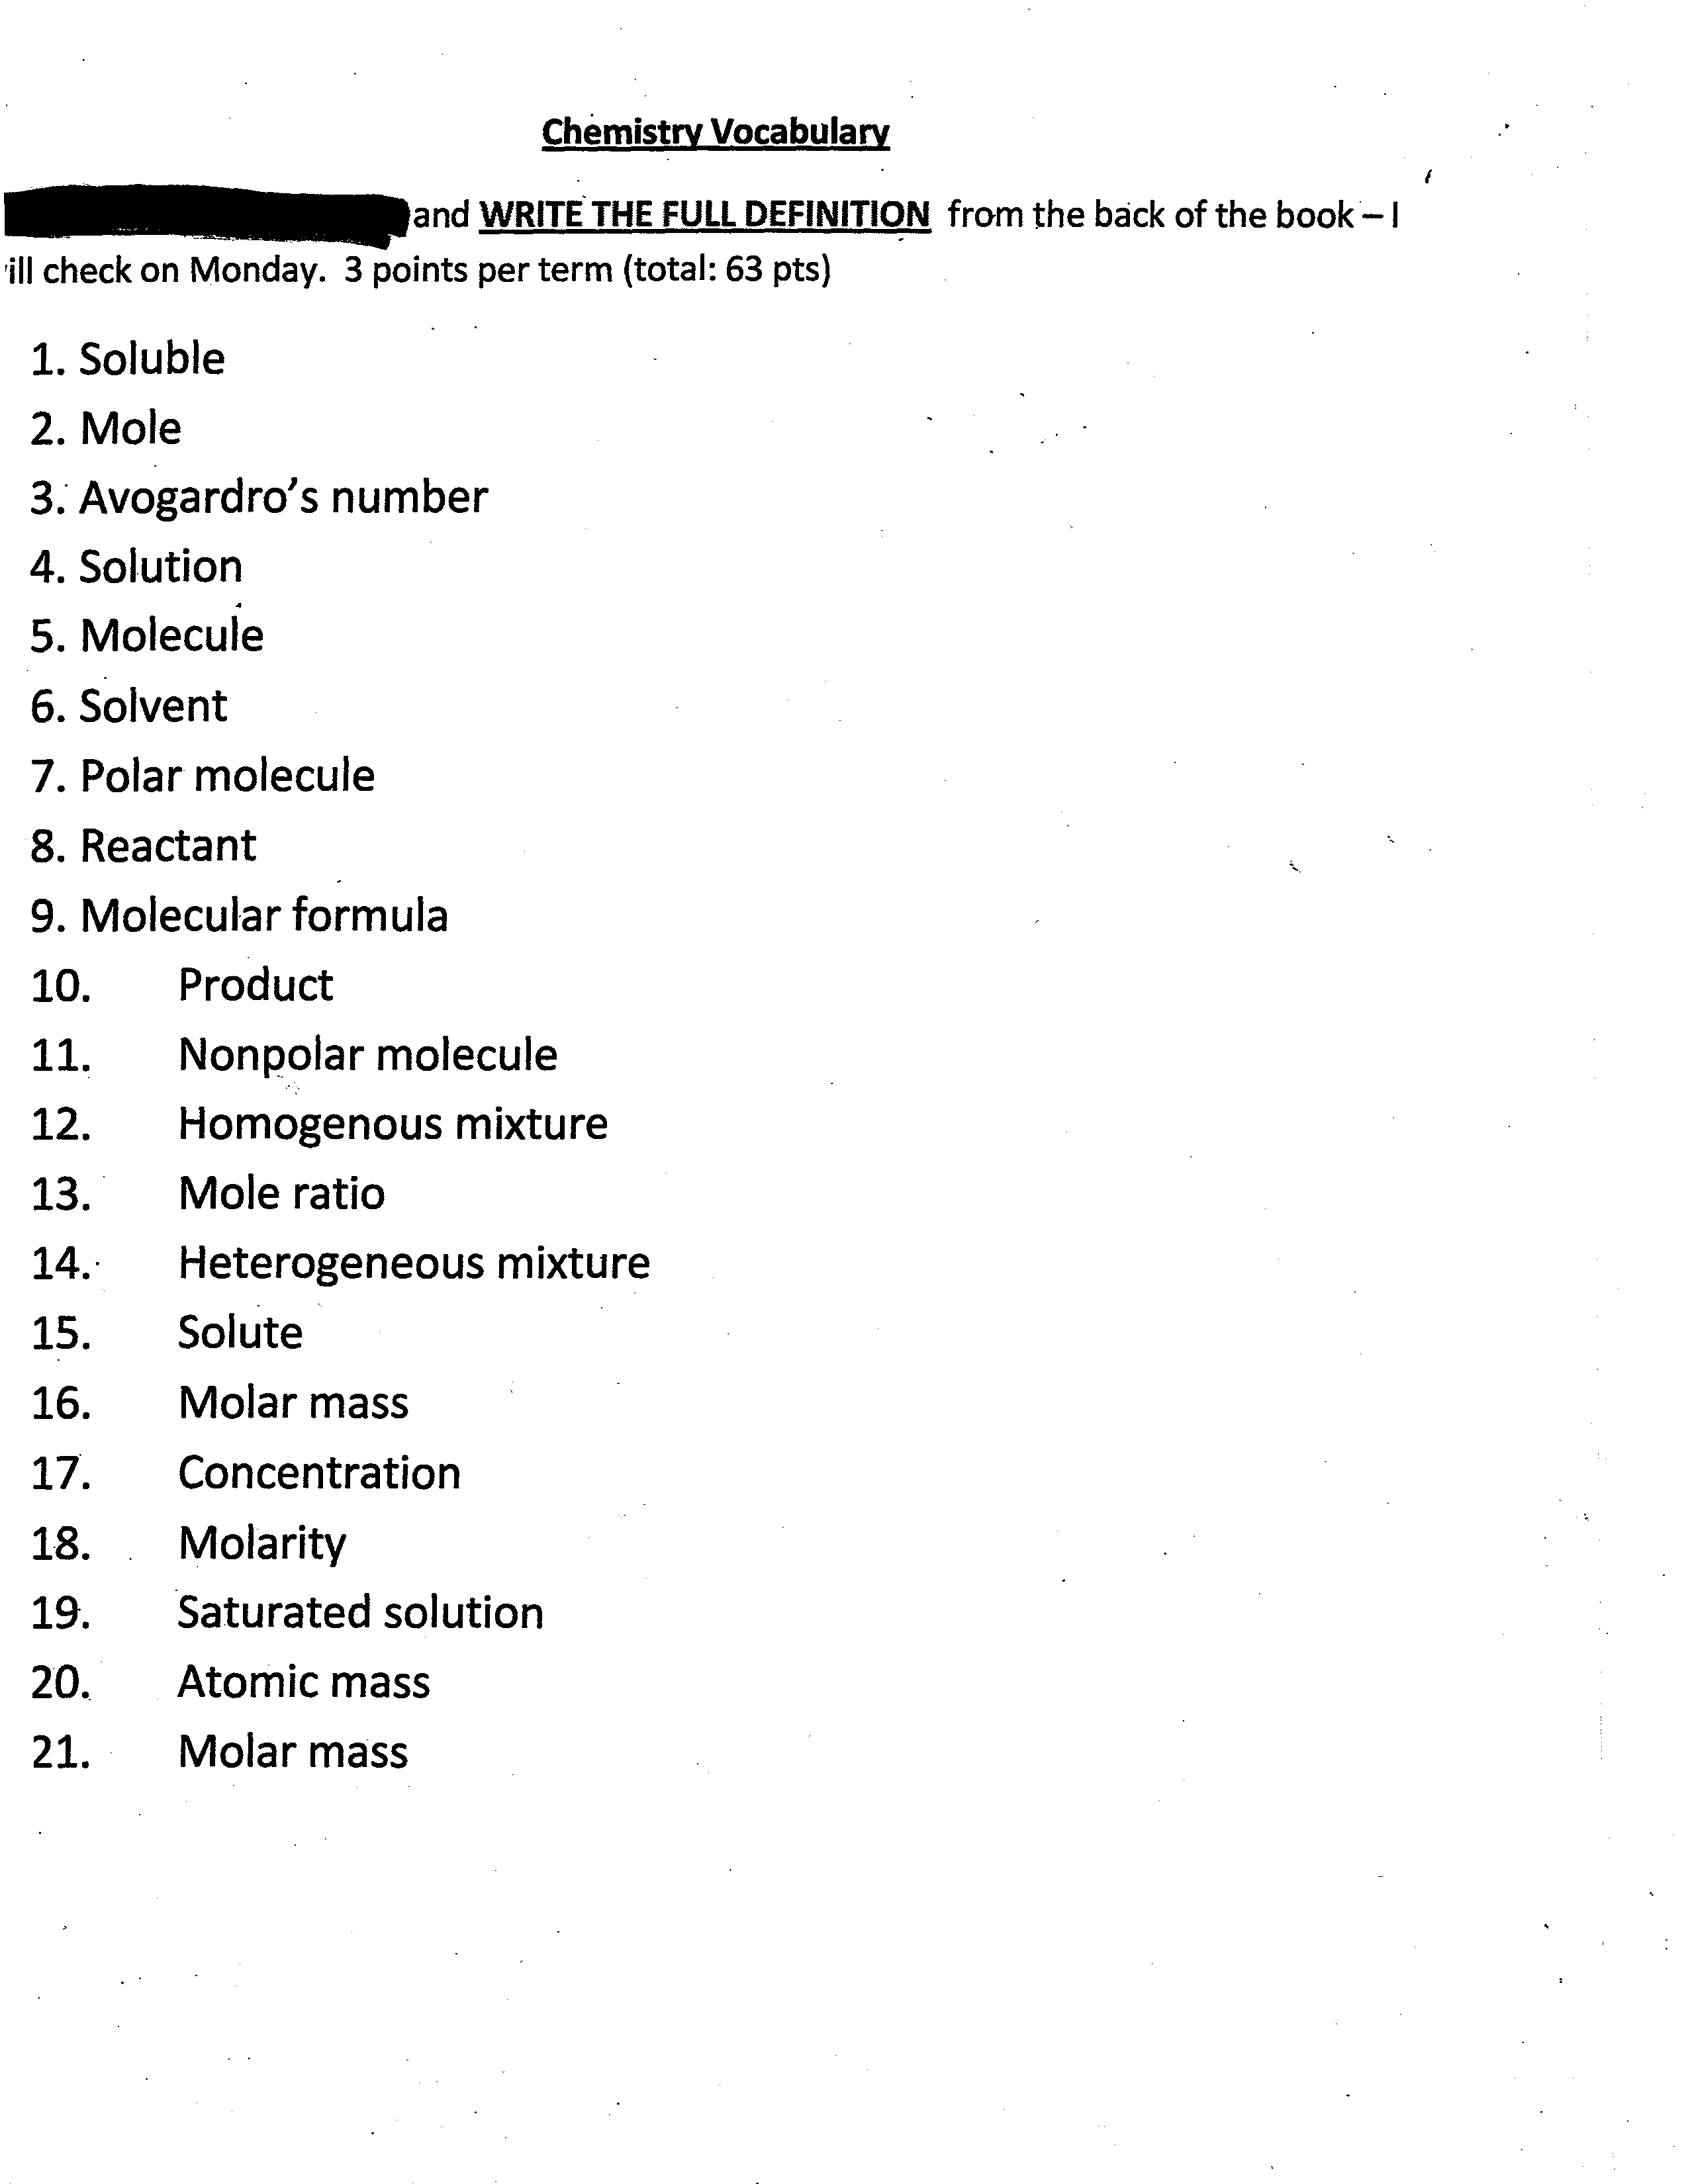 16 Images of Chemistry Vocabulary Worksheet